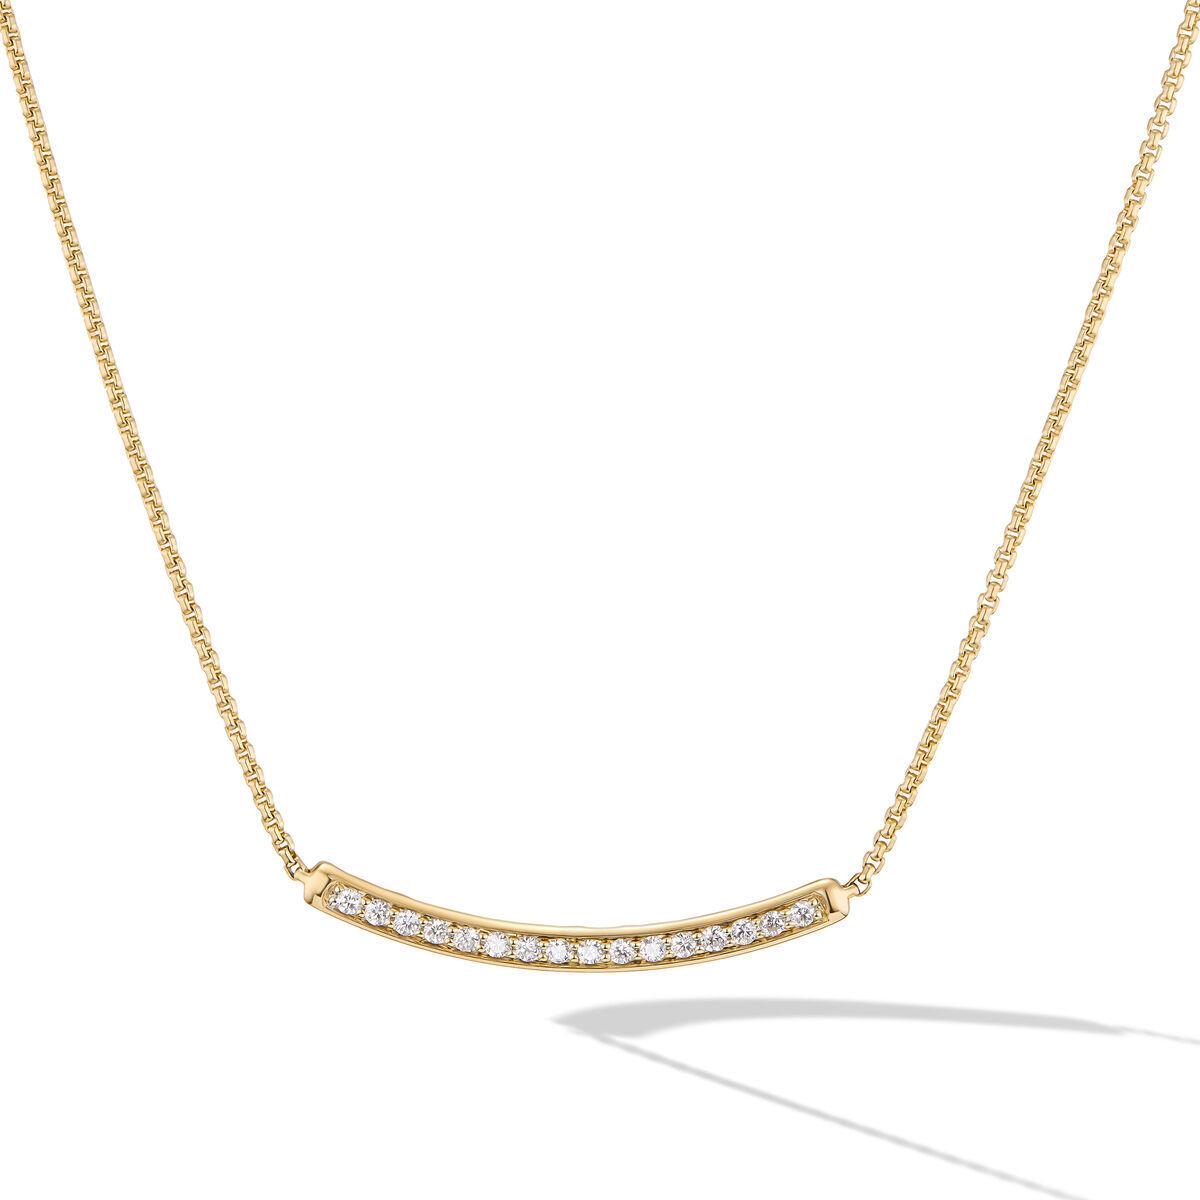 David Yurman Petite Pavé Bar Necklace in 18K Yellow Gold with Diamonds 0